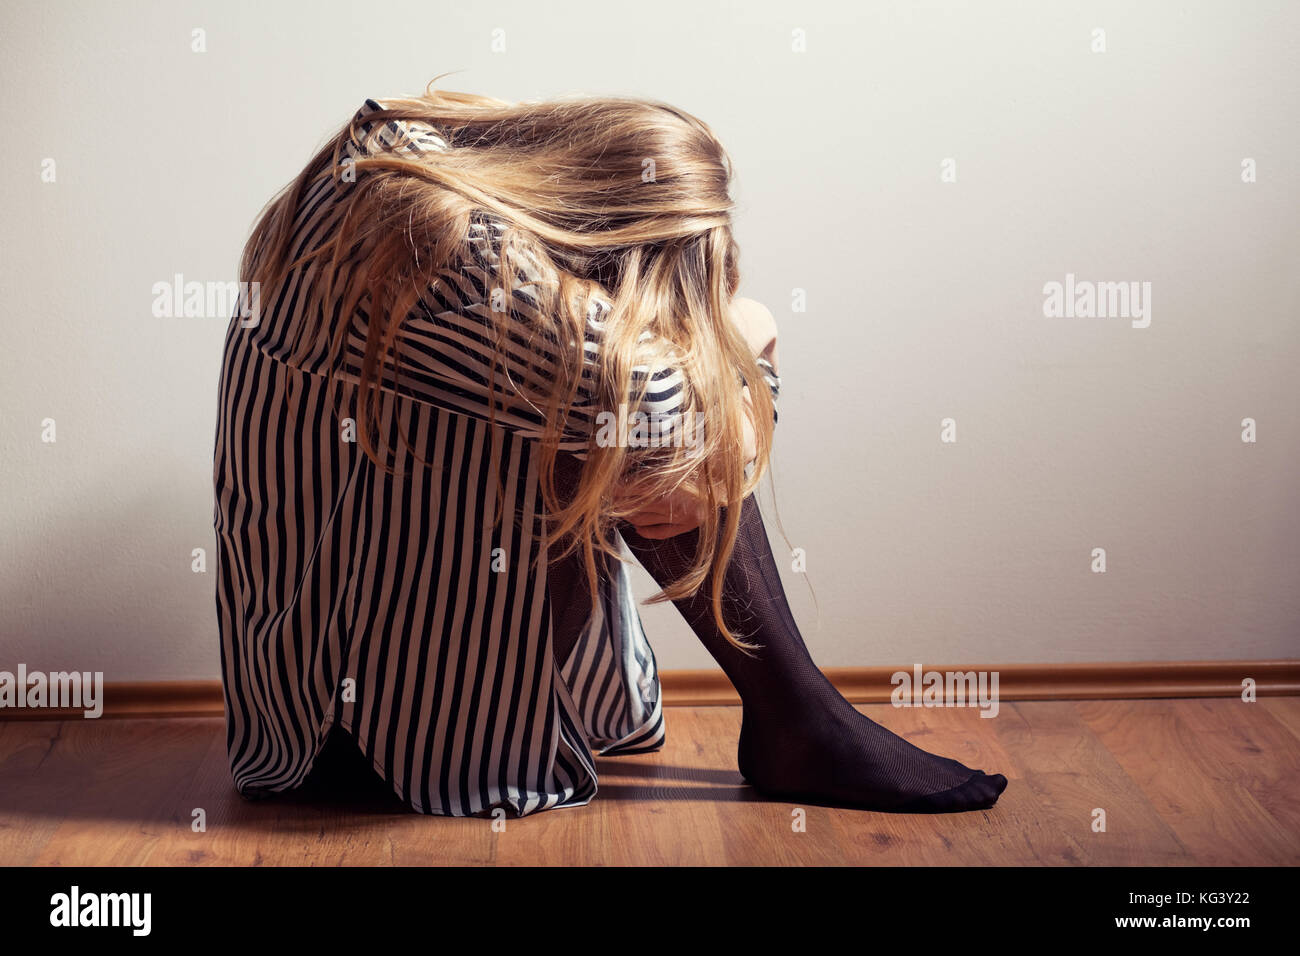 Depressed woman sitting on floor Stock Photo